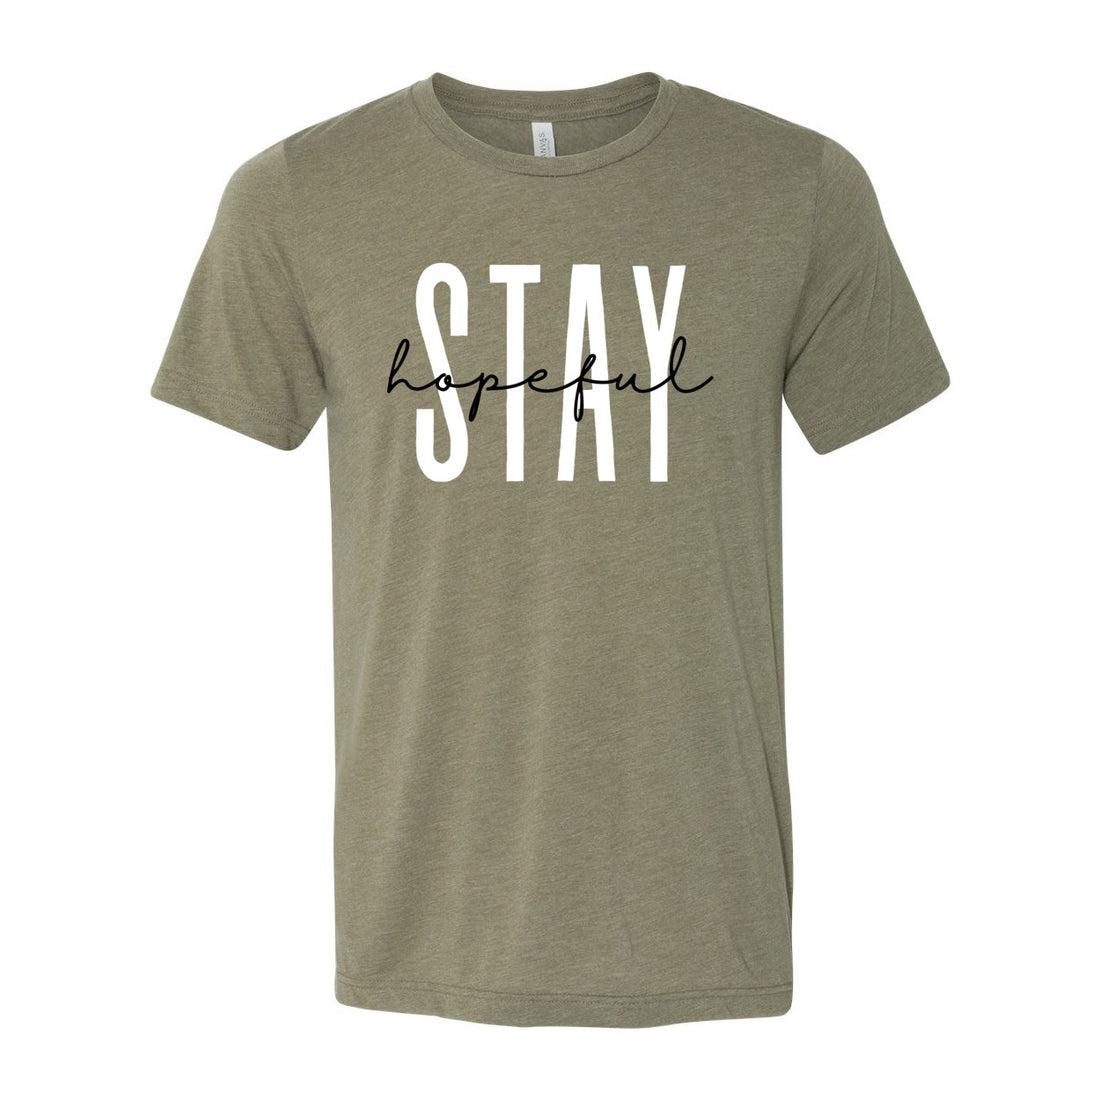 Stay Hopeful Short Sleeve Jersey Tee - T-Shirts - Positively Sassy - Stay Hopeful Short Sleeve Jersey Tee